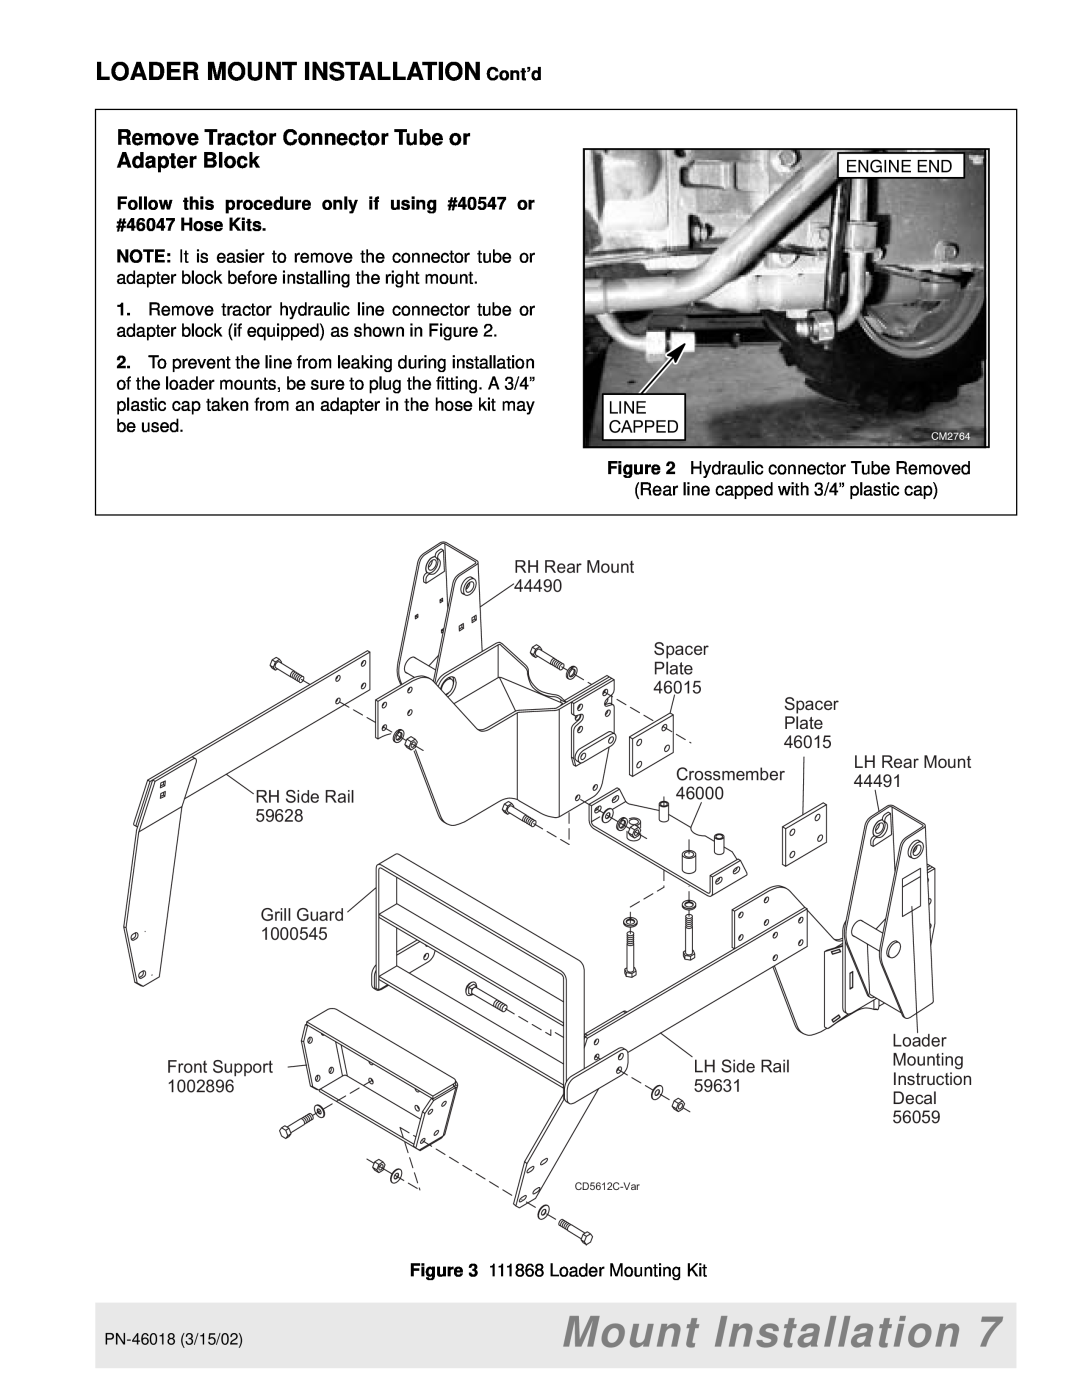 Woods Equipment M8200 manual Mount Installation, LOADER MOUNT INSTALLATION Cont’d 